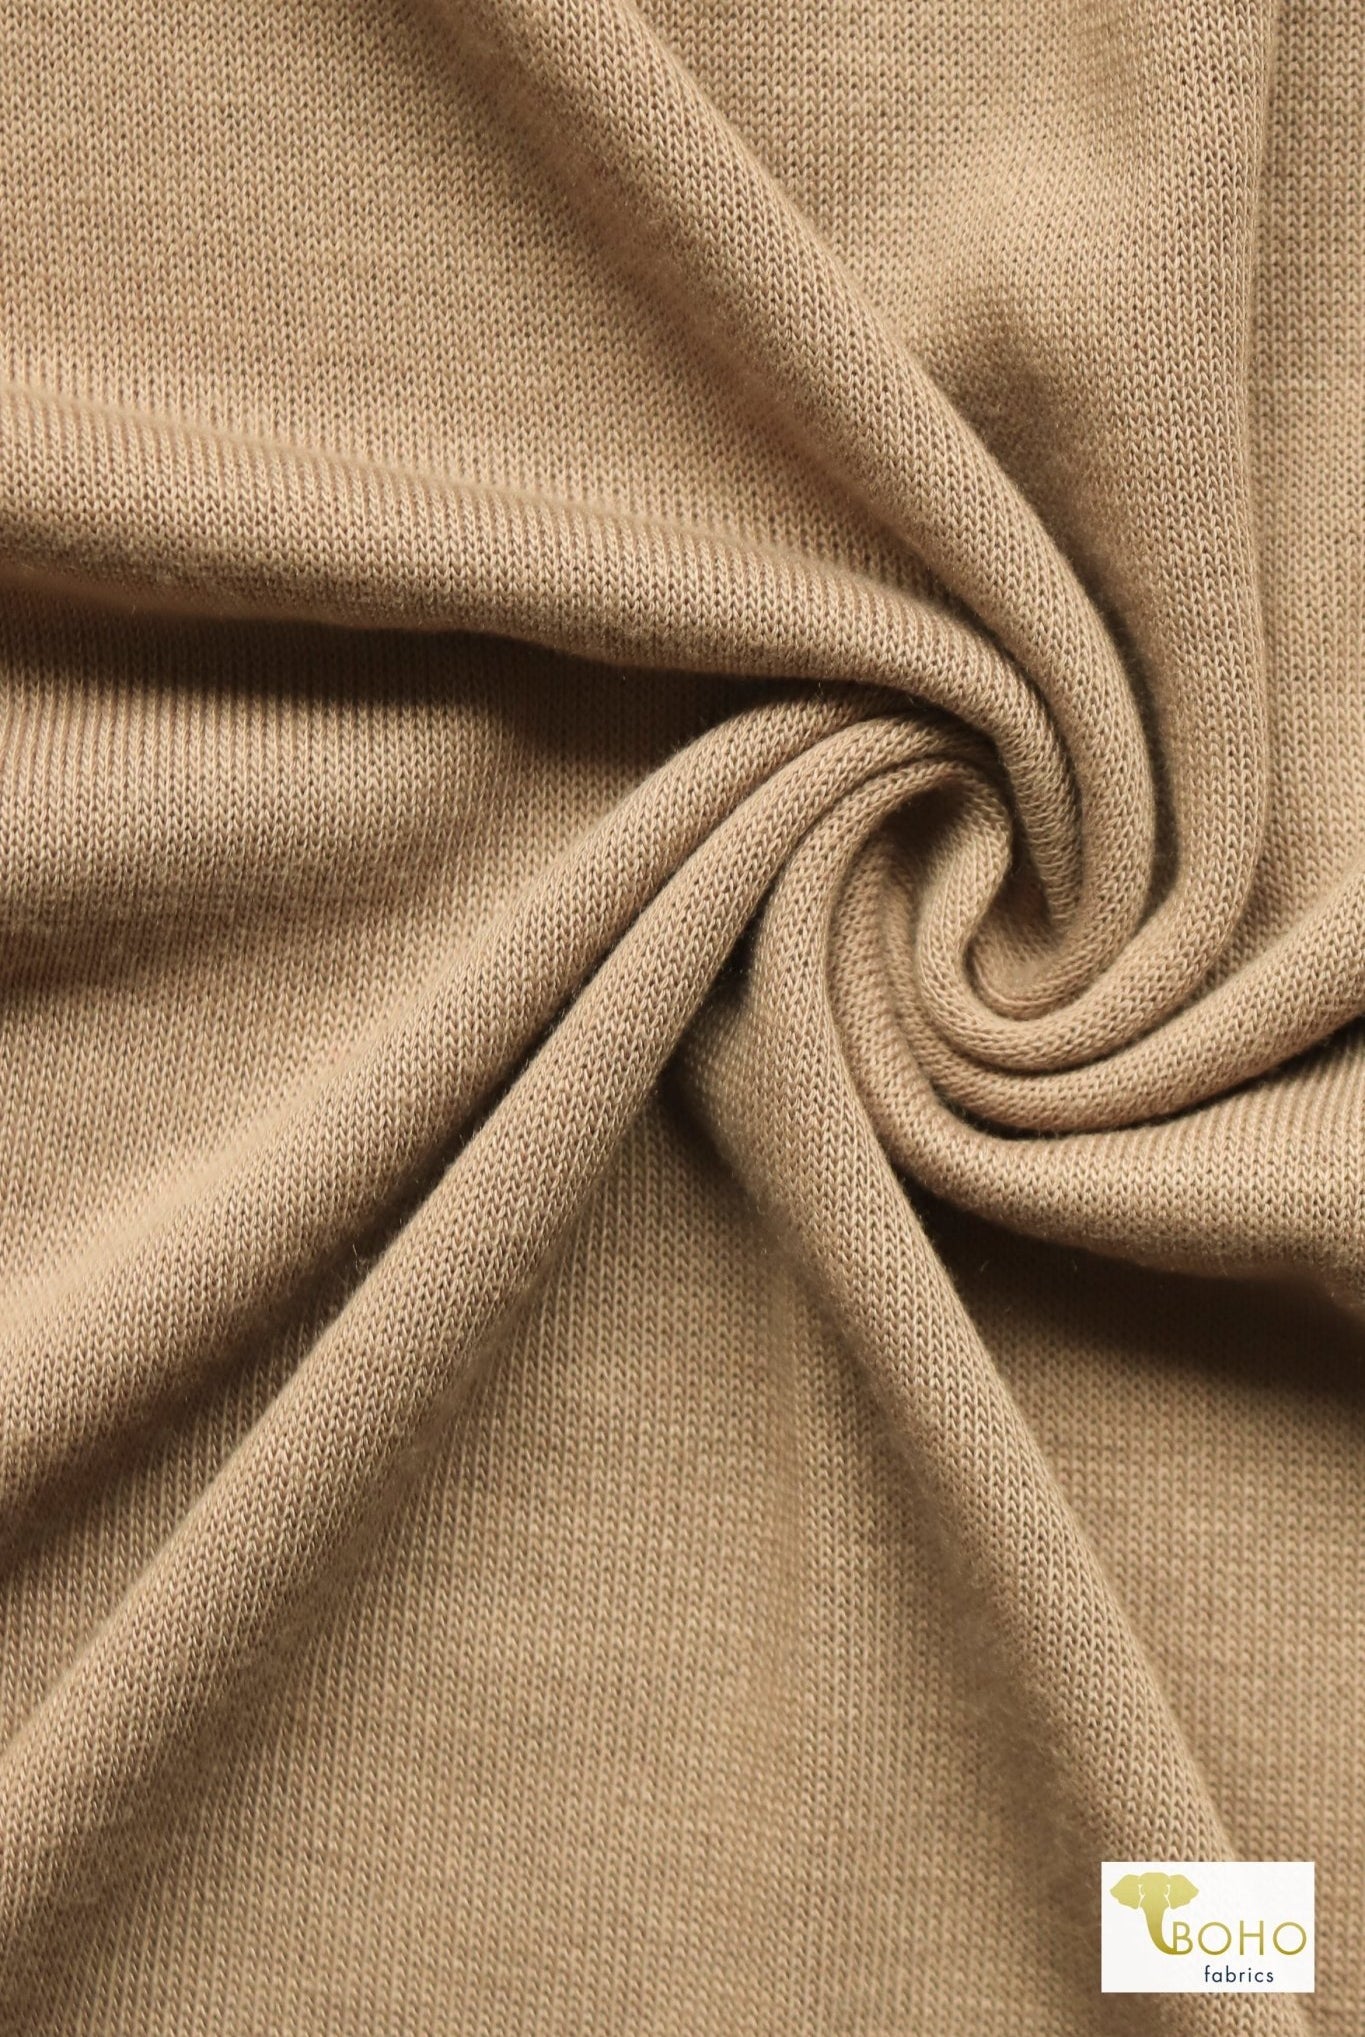 Warm Taupe, Hacci Sweater Knit - Boho Fabrics